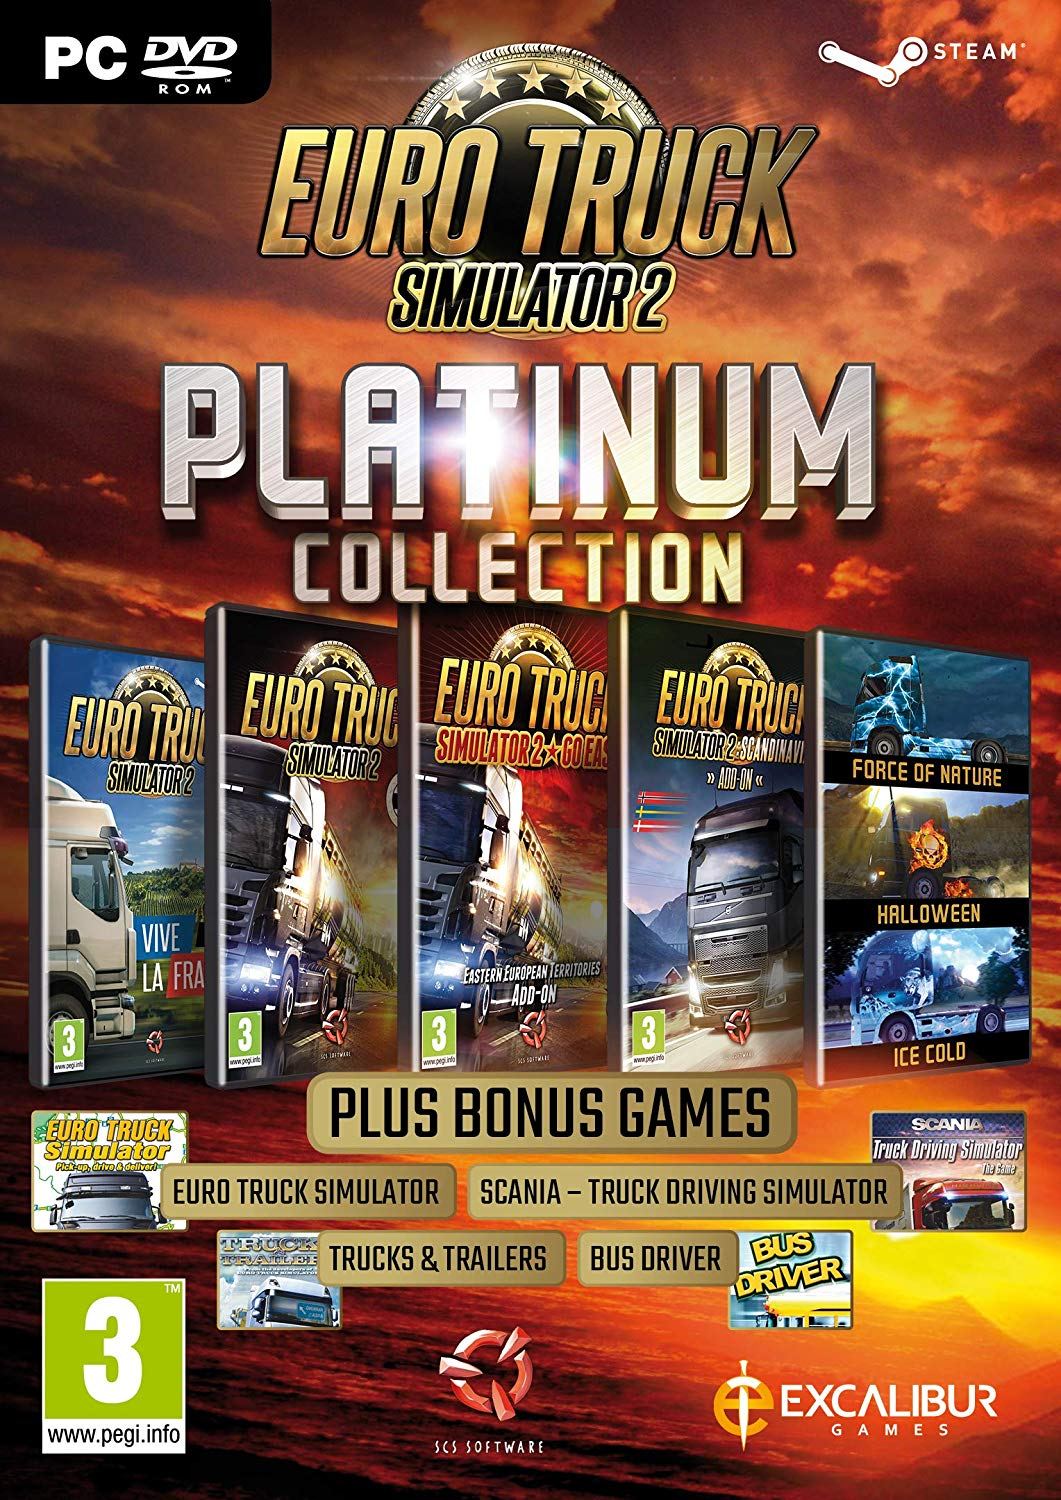 Euro Truck Simulator 2 Platinum Collection (DVD-ROM) for Windows